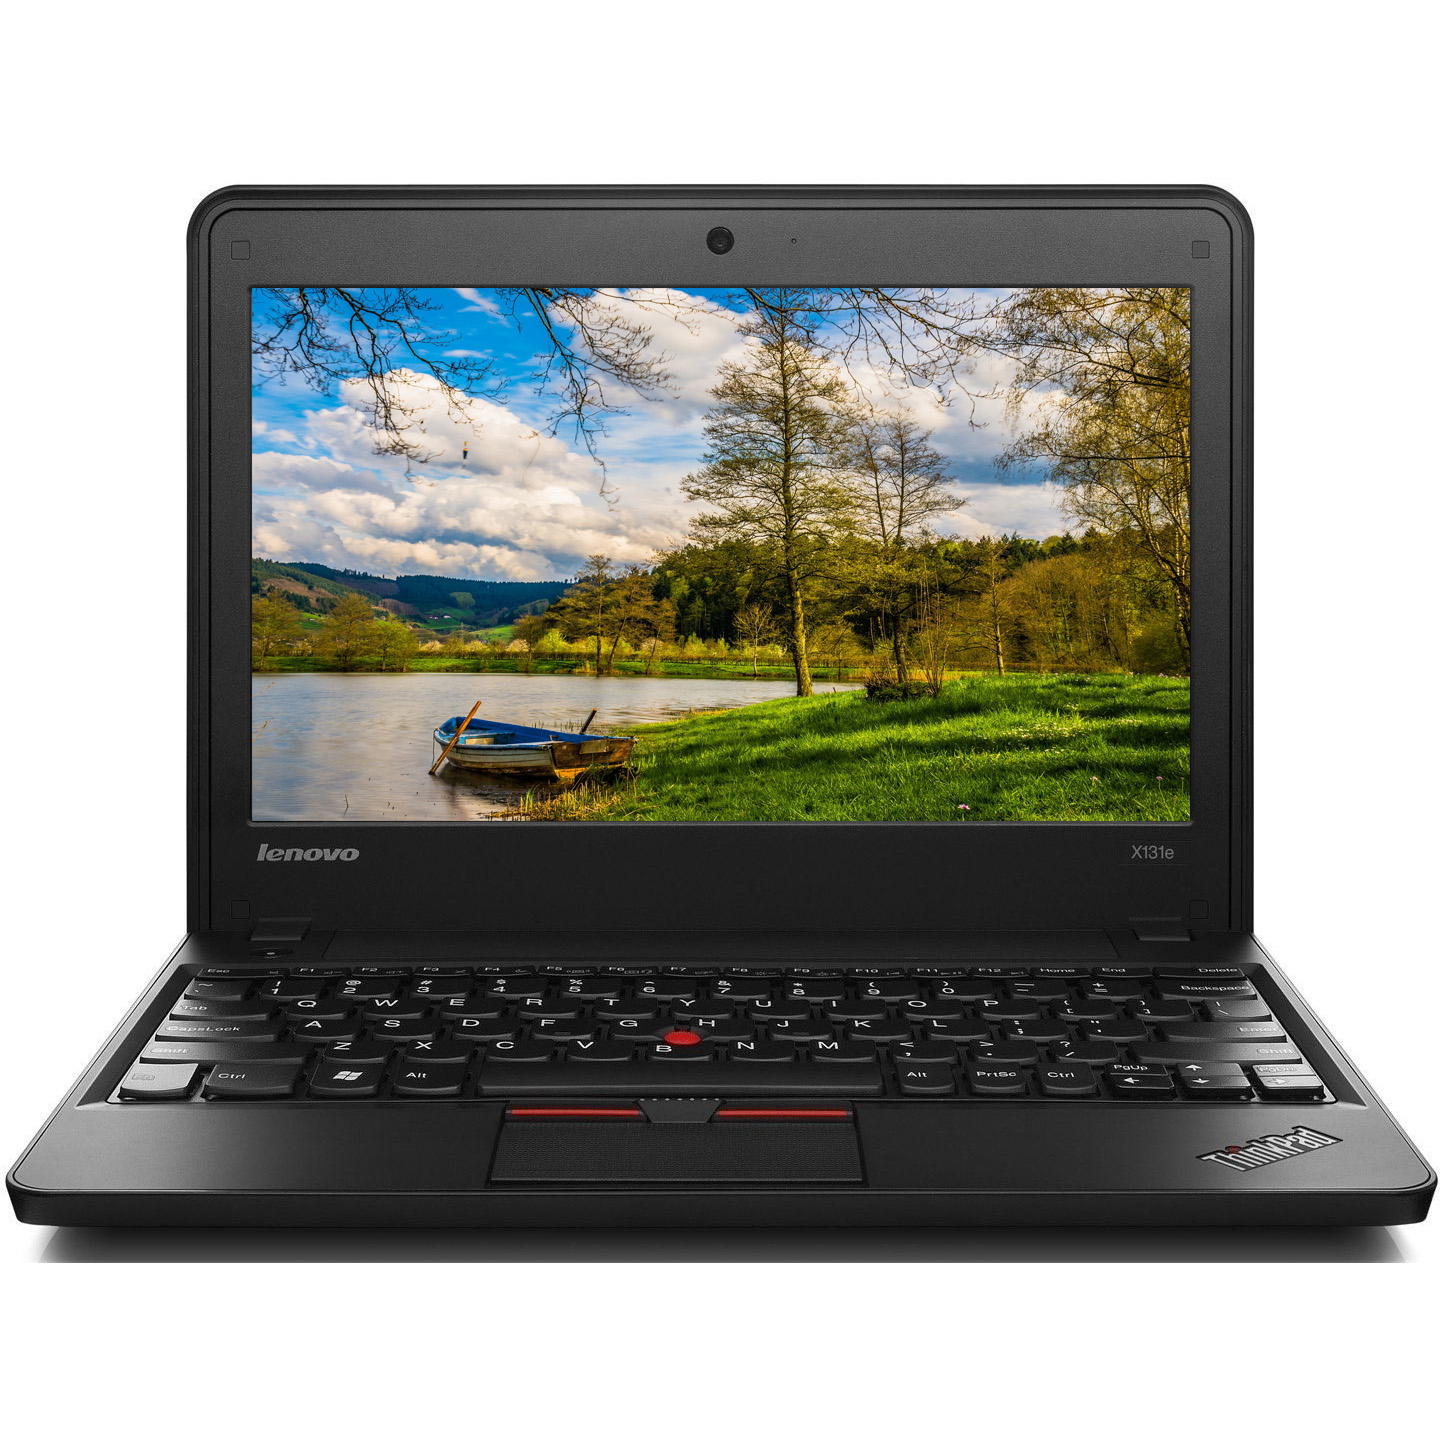 Lenova Thinkpad 11.6″ Chromebook Only $74.99! (Refurb)